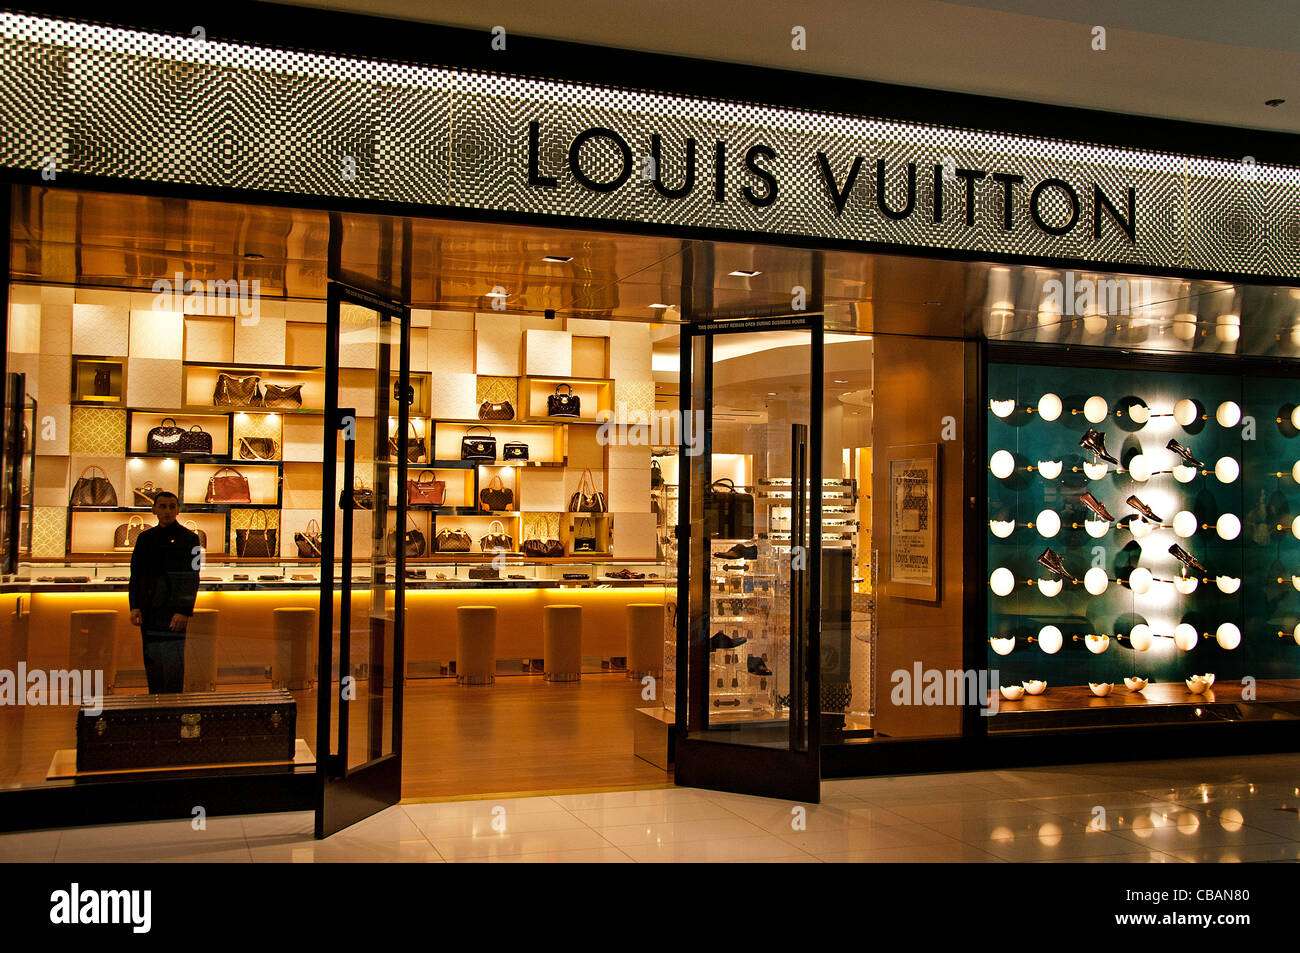 Louis Vuittone In Sandton  Natural Resource Department